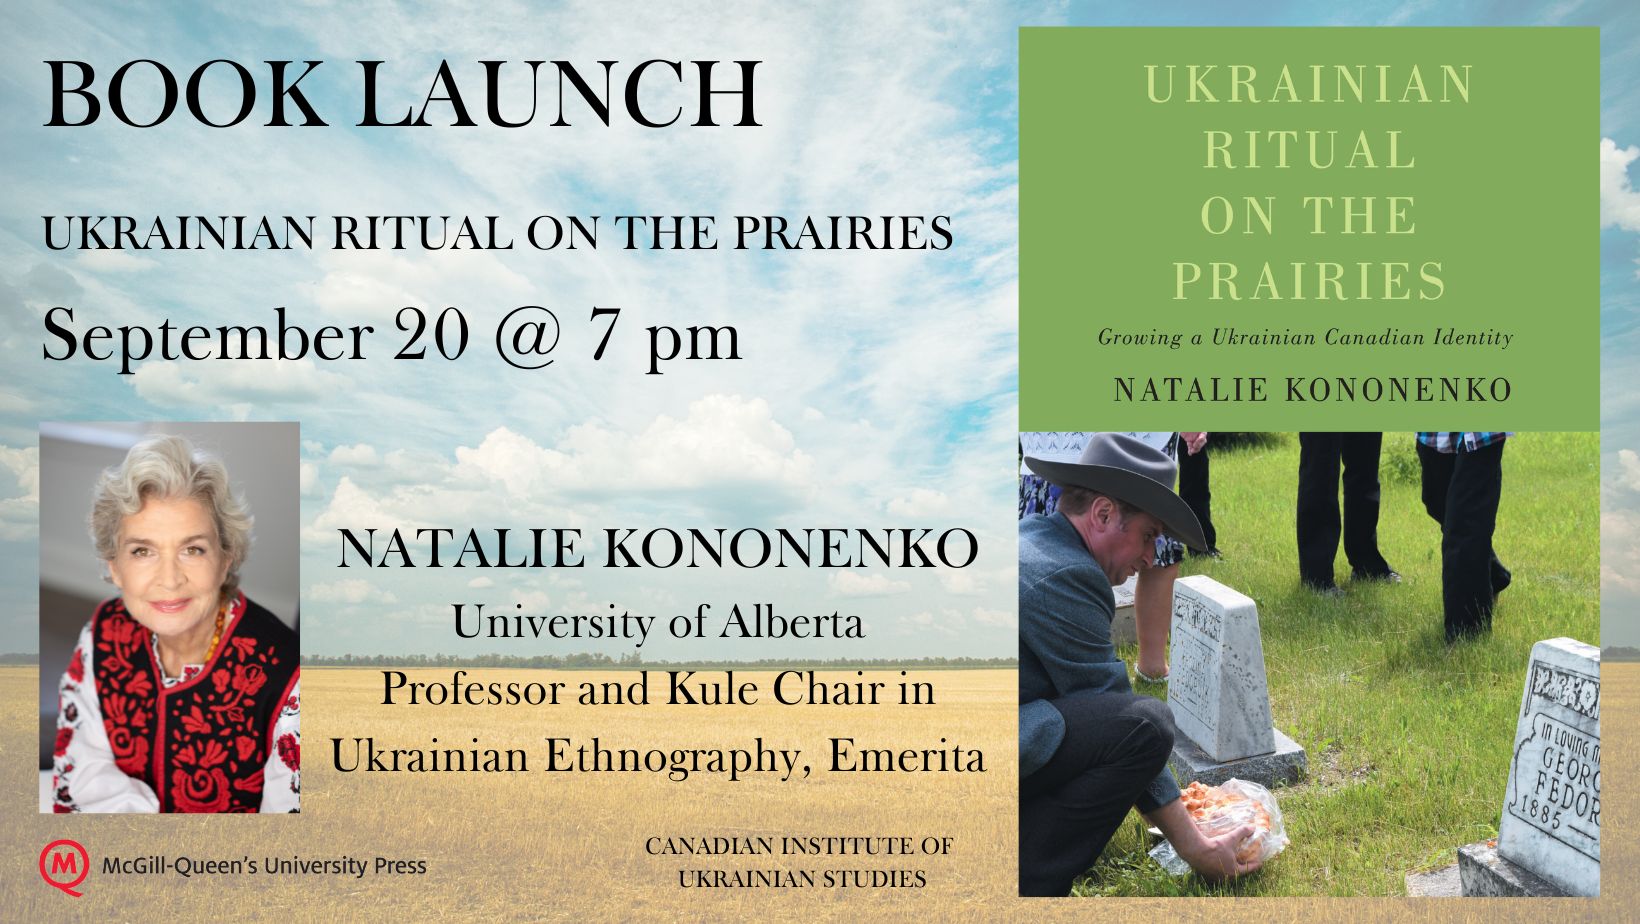 kononenko-book-launch-1.jpg